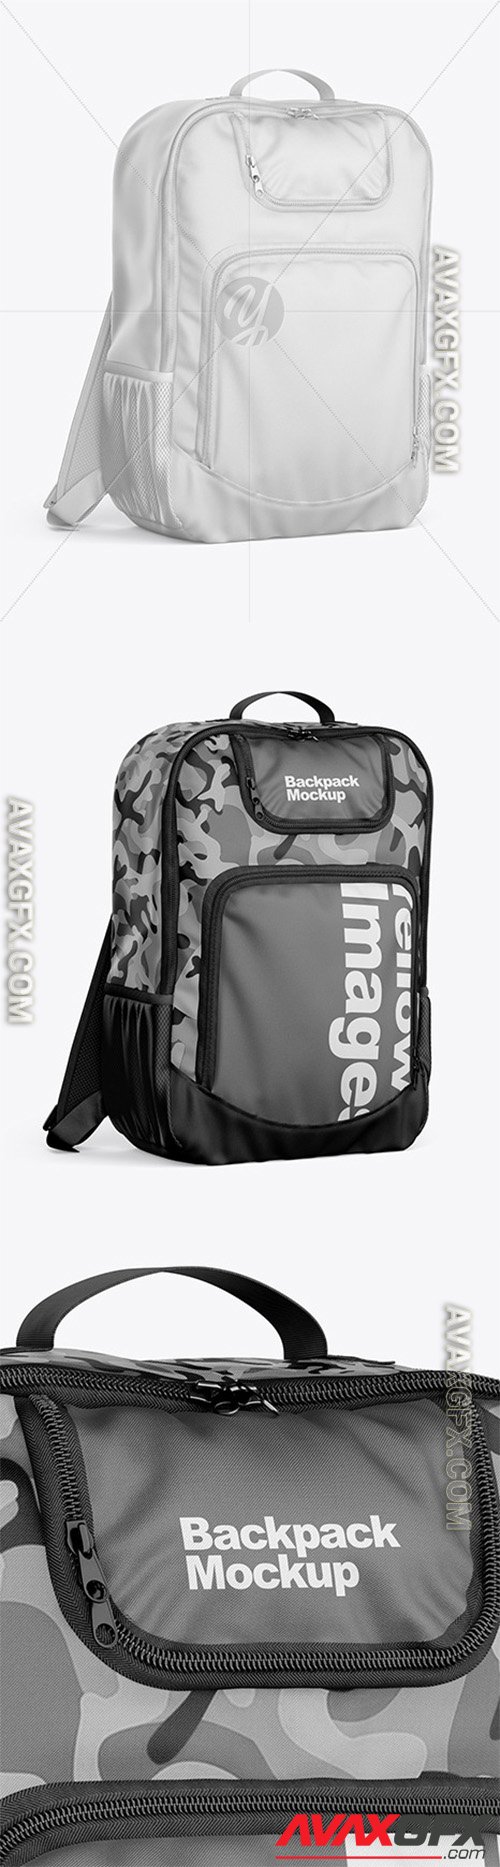 Backpack Mockup 52132